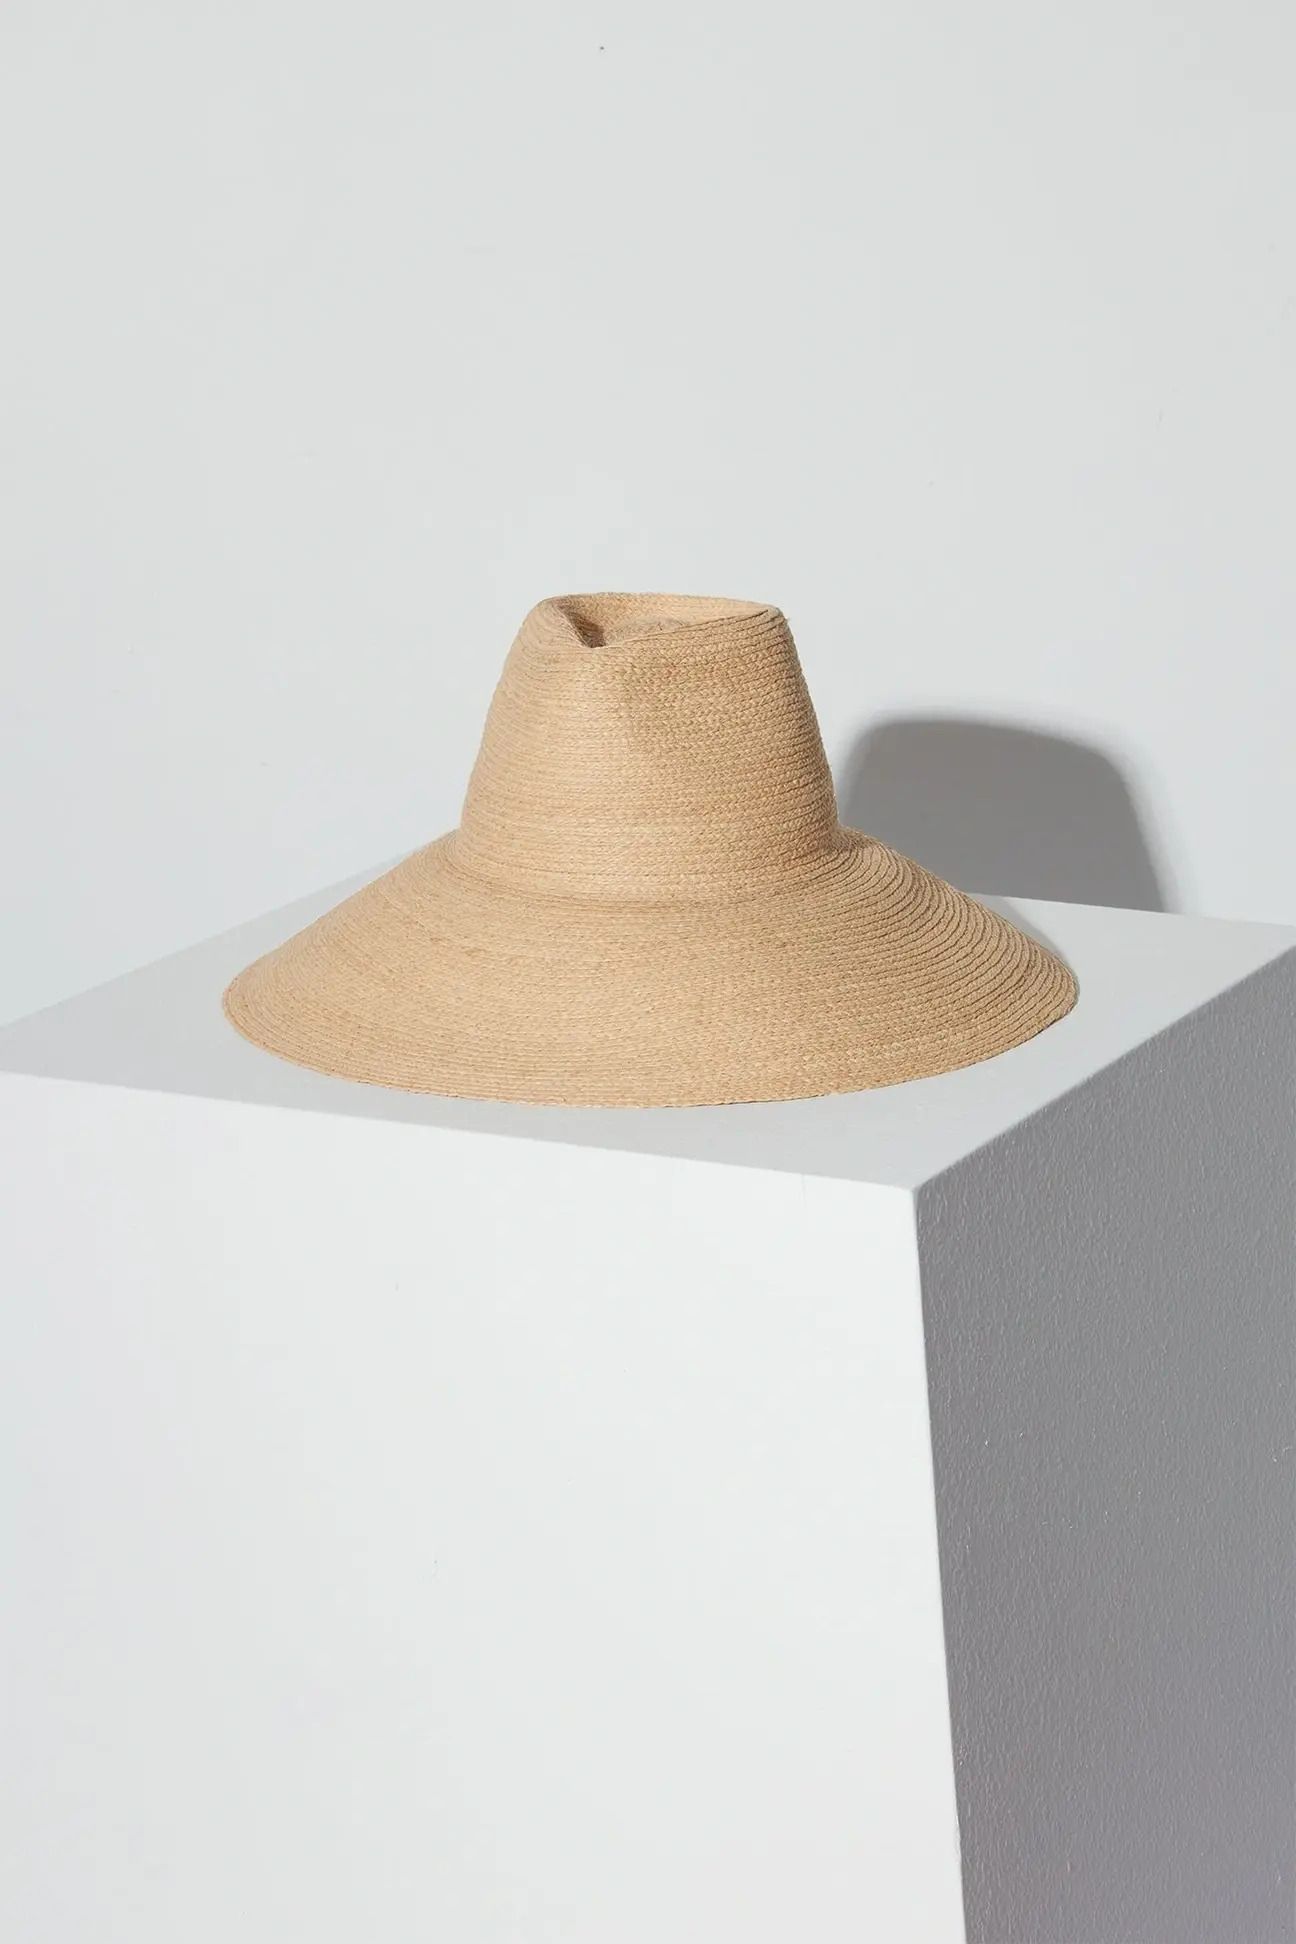 Funny 20 is 20 Bucks Bucket Hat for Women and Men, Outdoor Sunshade Fishing  Sunscreen Beach Hat